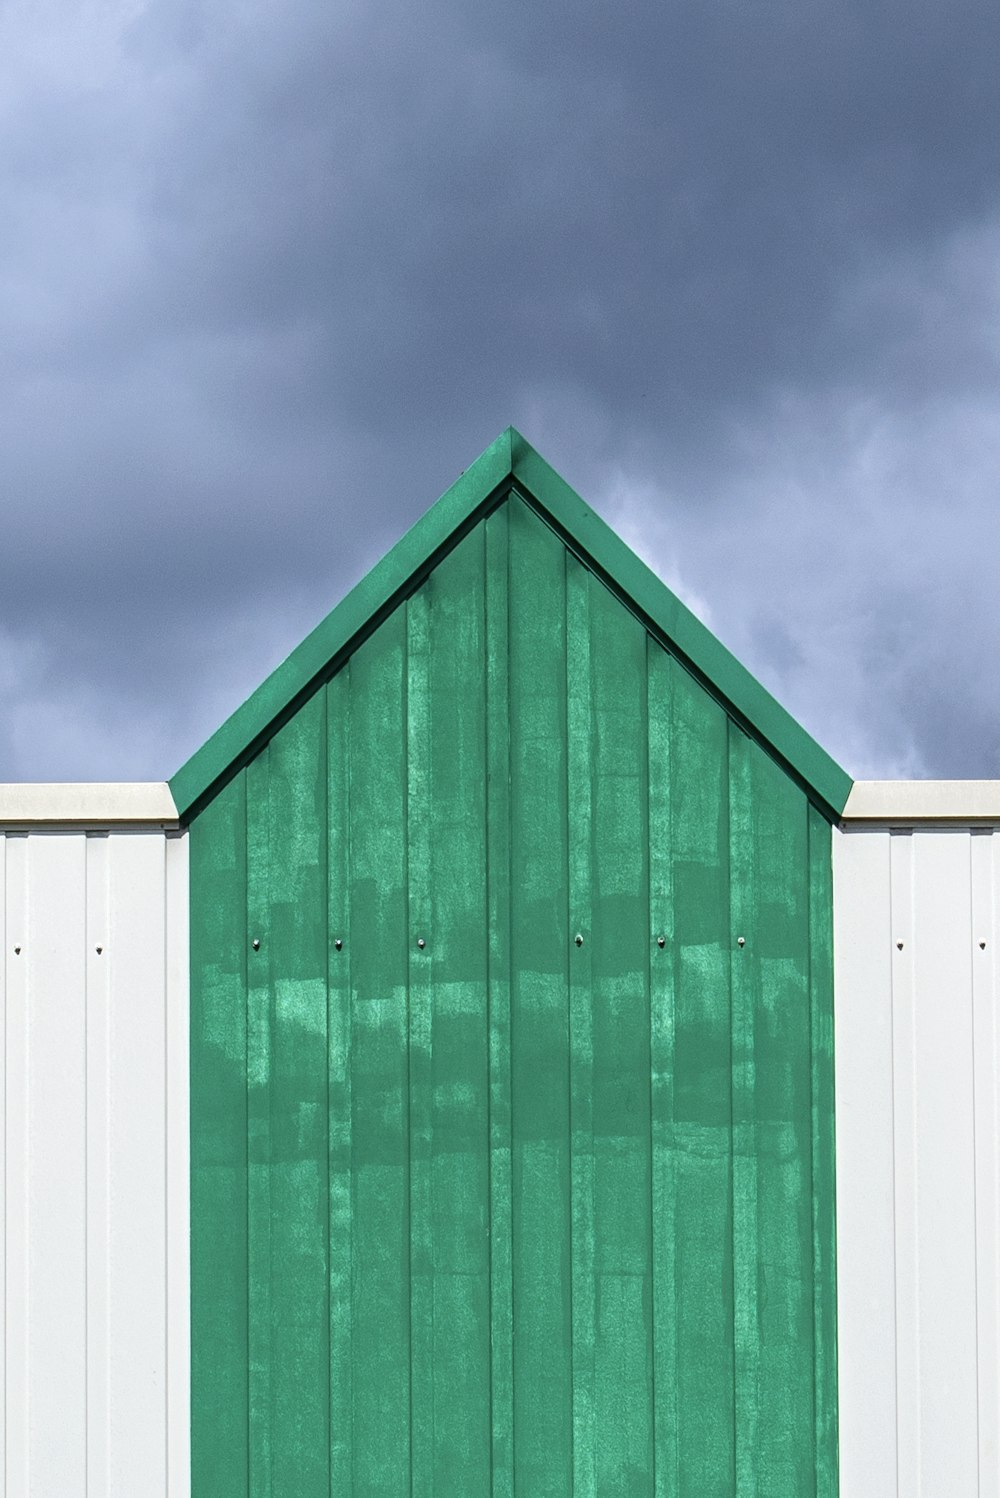 green wooden house under blue sky